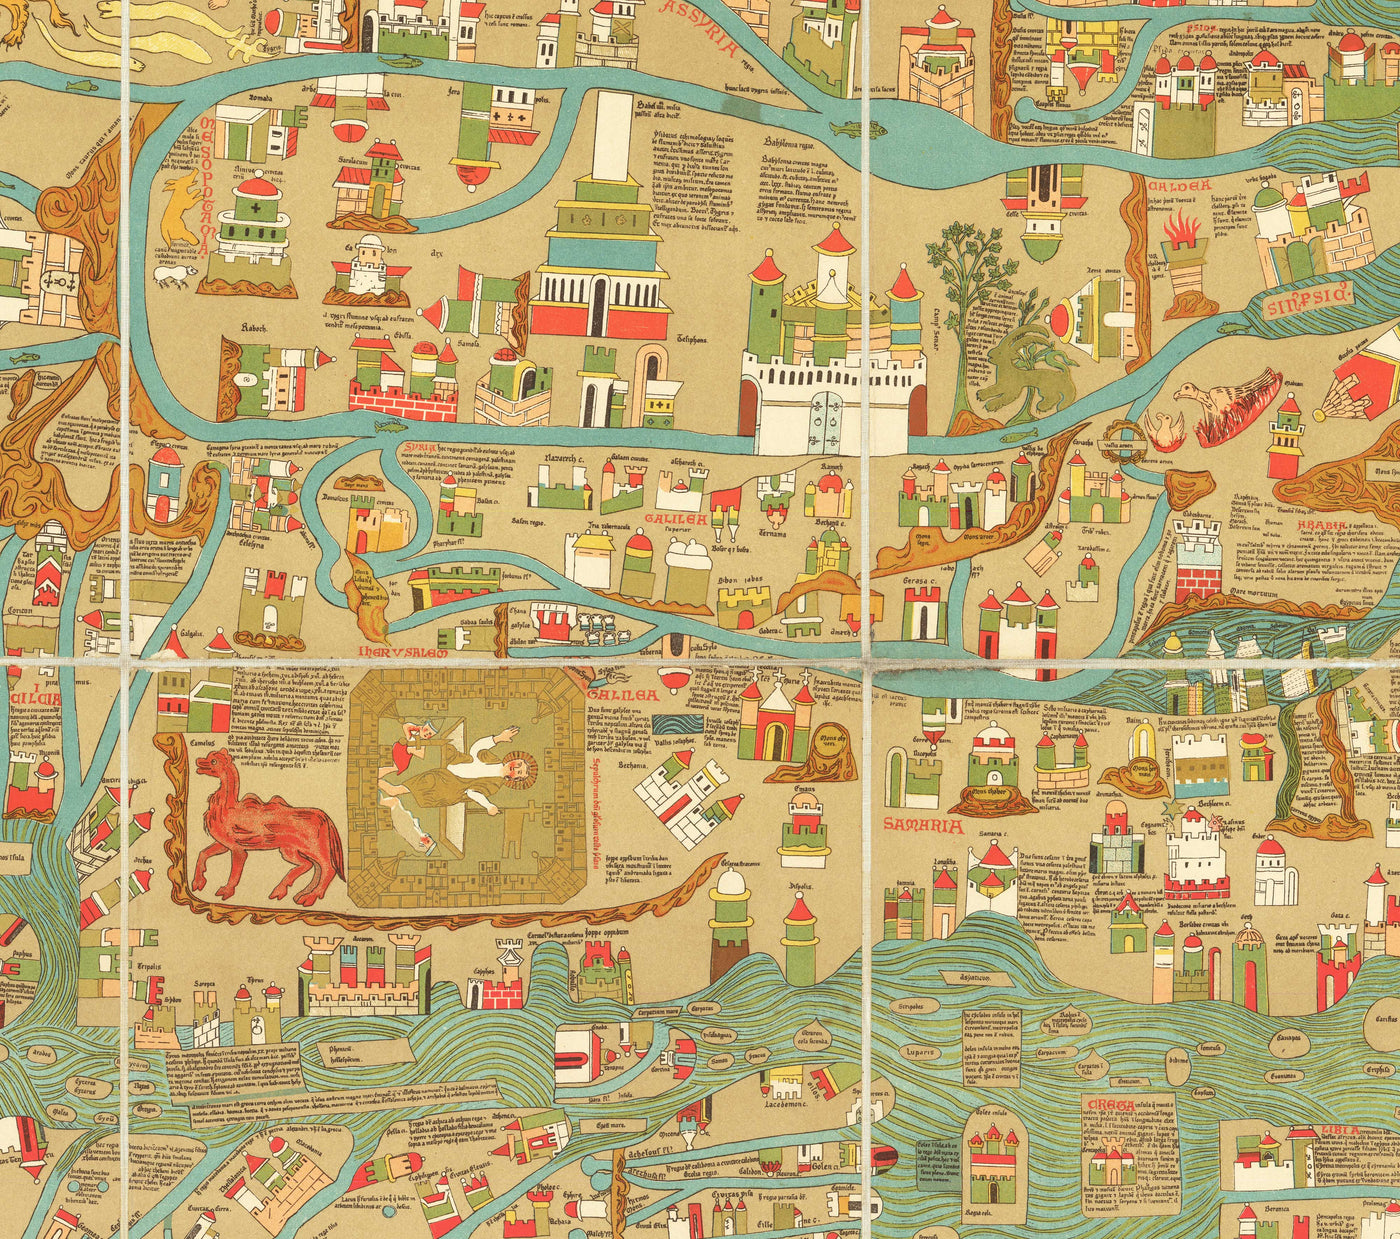 Antiguo Ebstorf Mappa Mundi - Antiguo Atlas Mundial del Siglo XIII - Gibraltar, Mediterráneo, Jerusalén, Sicilia, Grecia